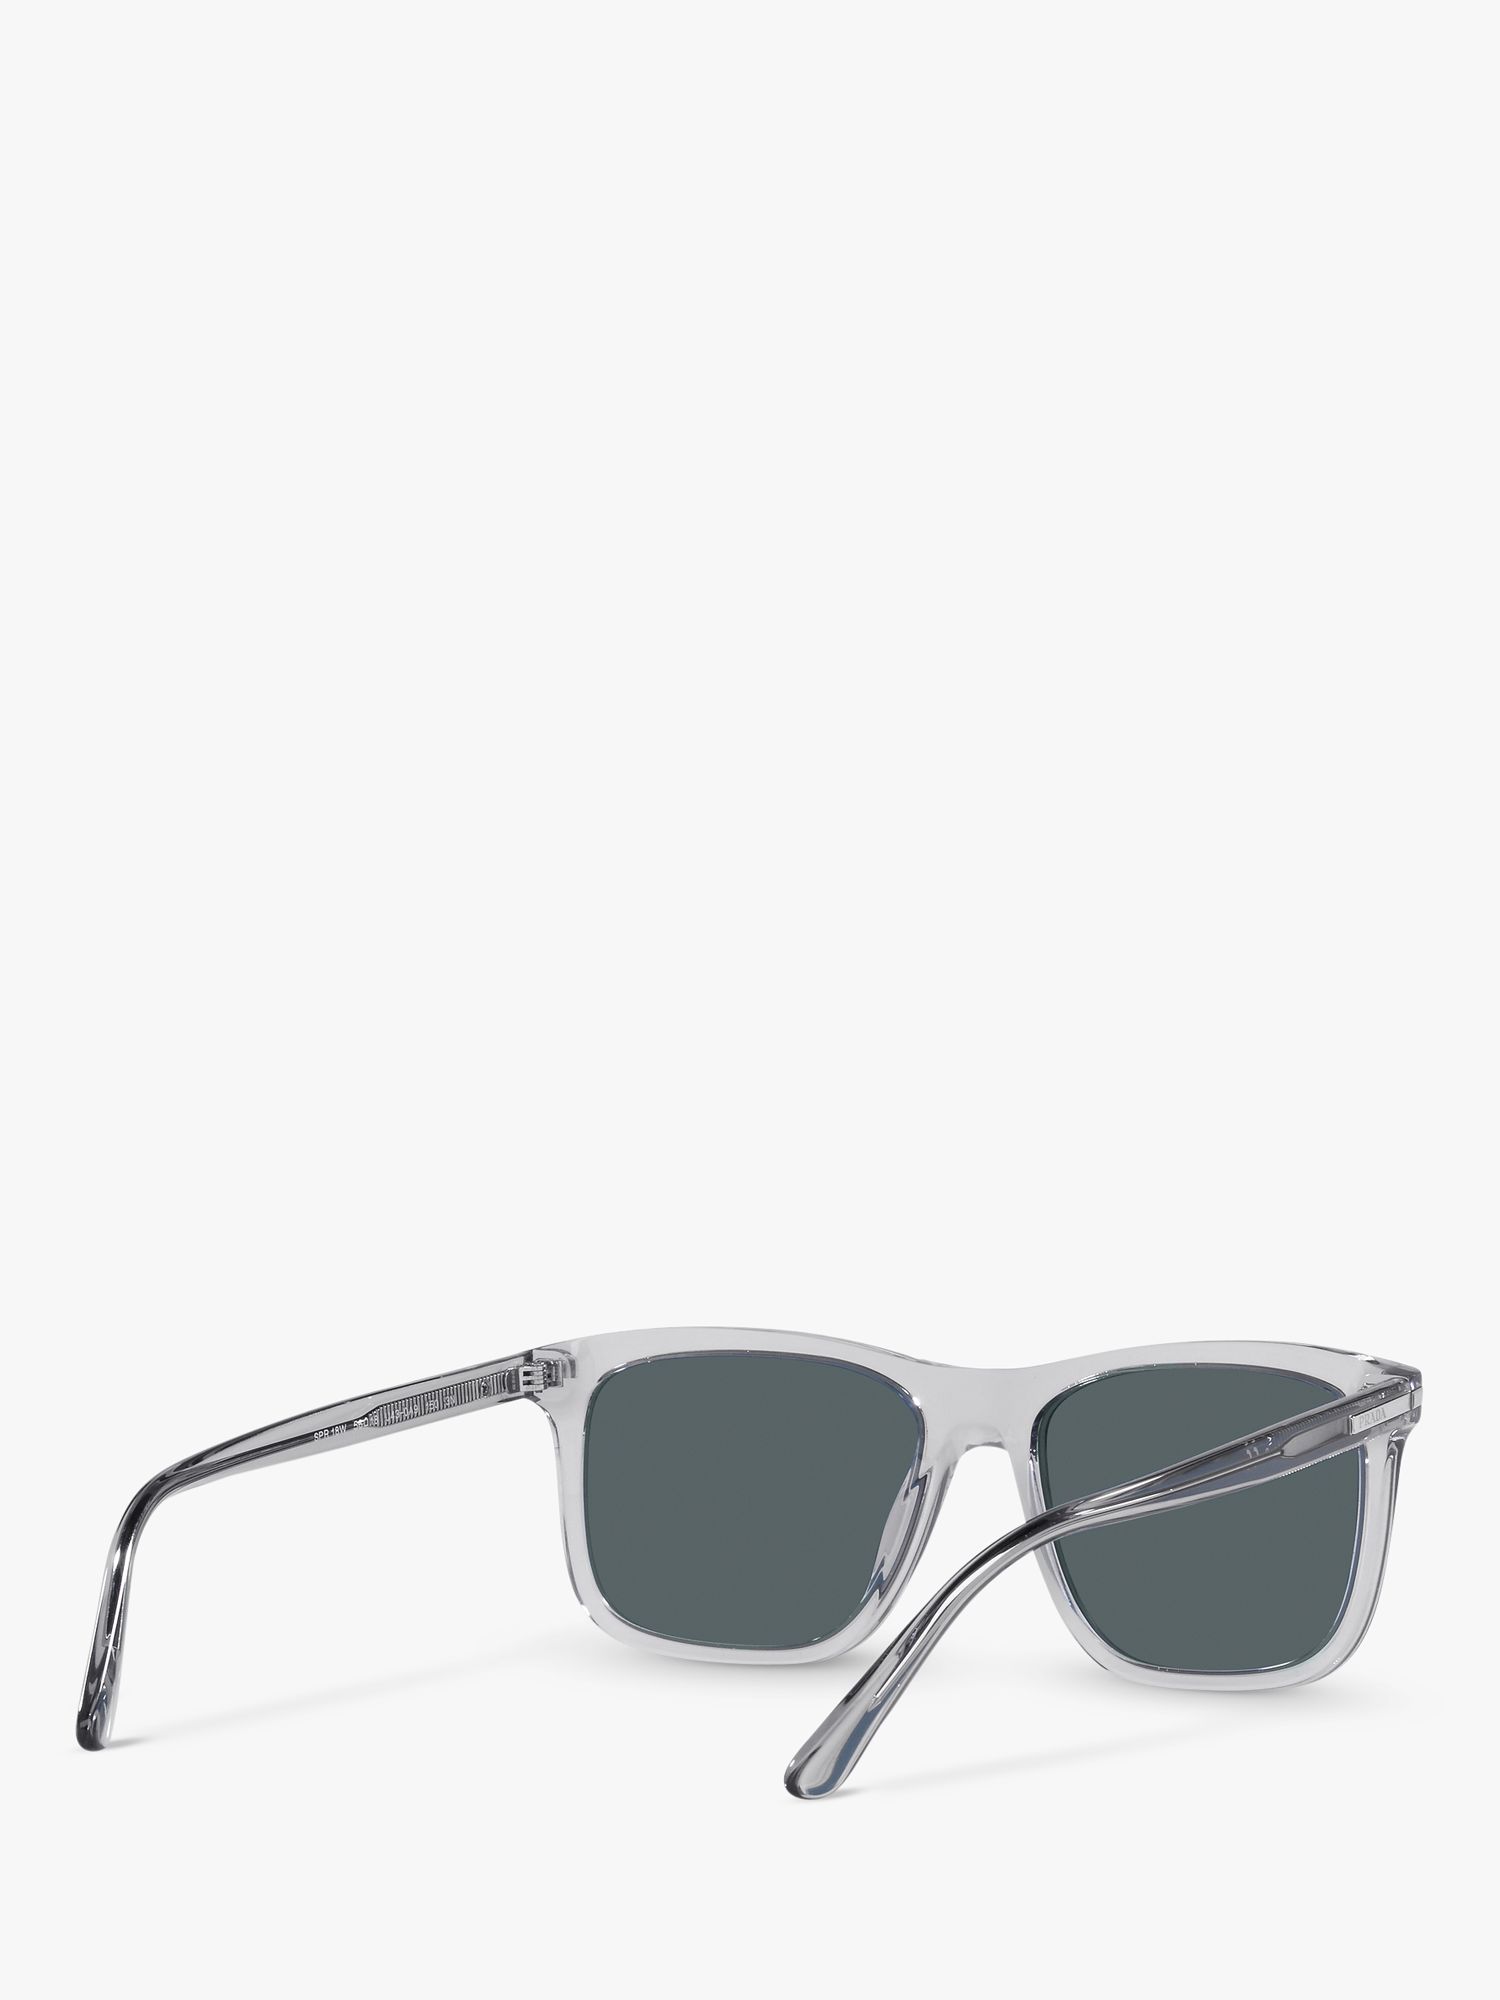 Louis Vuitton LV Link Light Classic Square Sunglasses Black Acetate & Metal. Size E